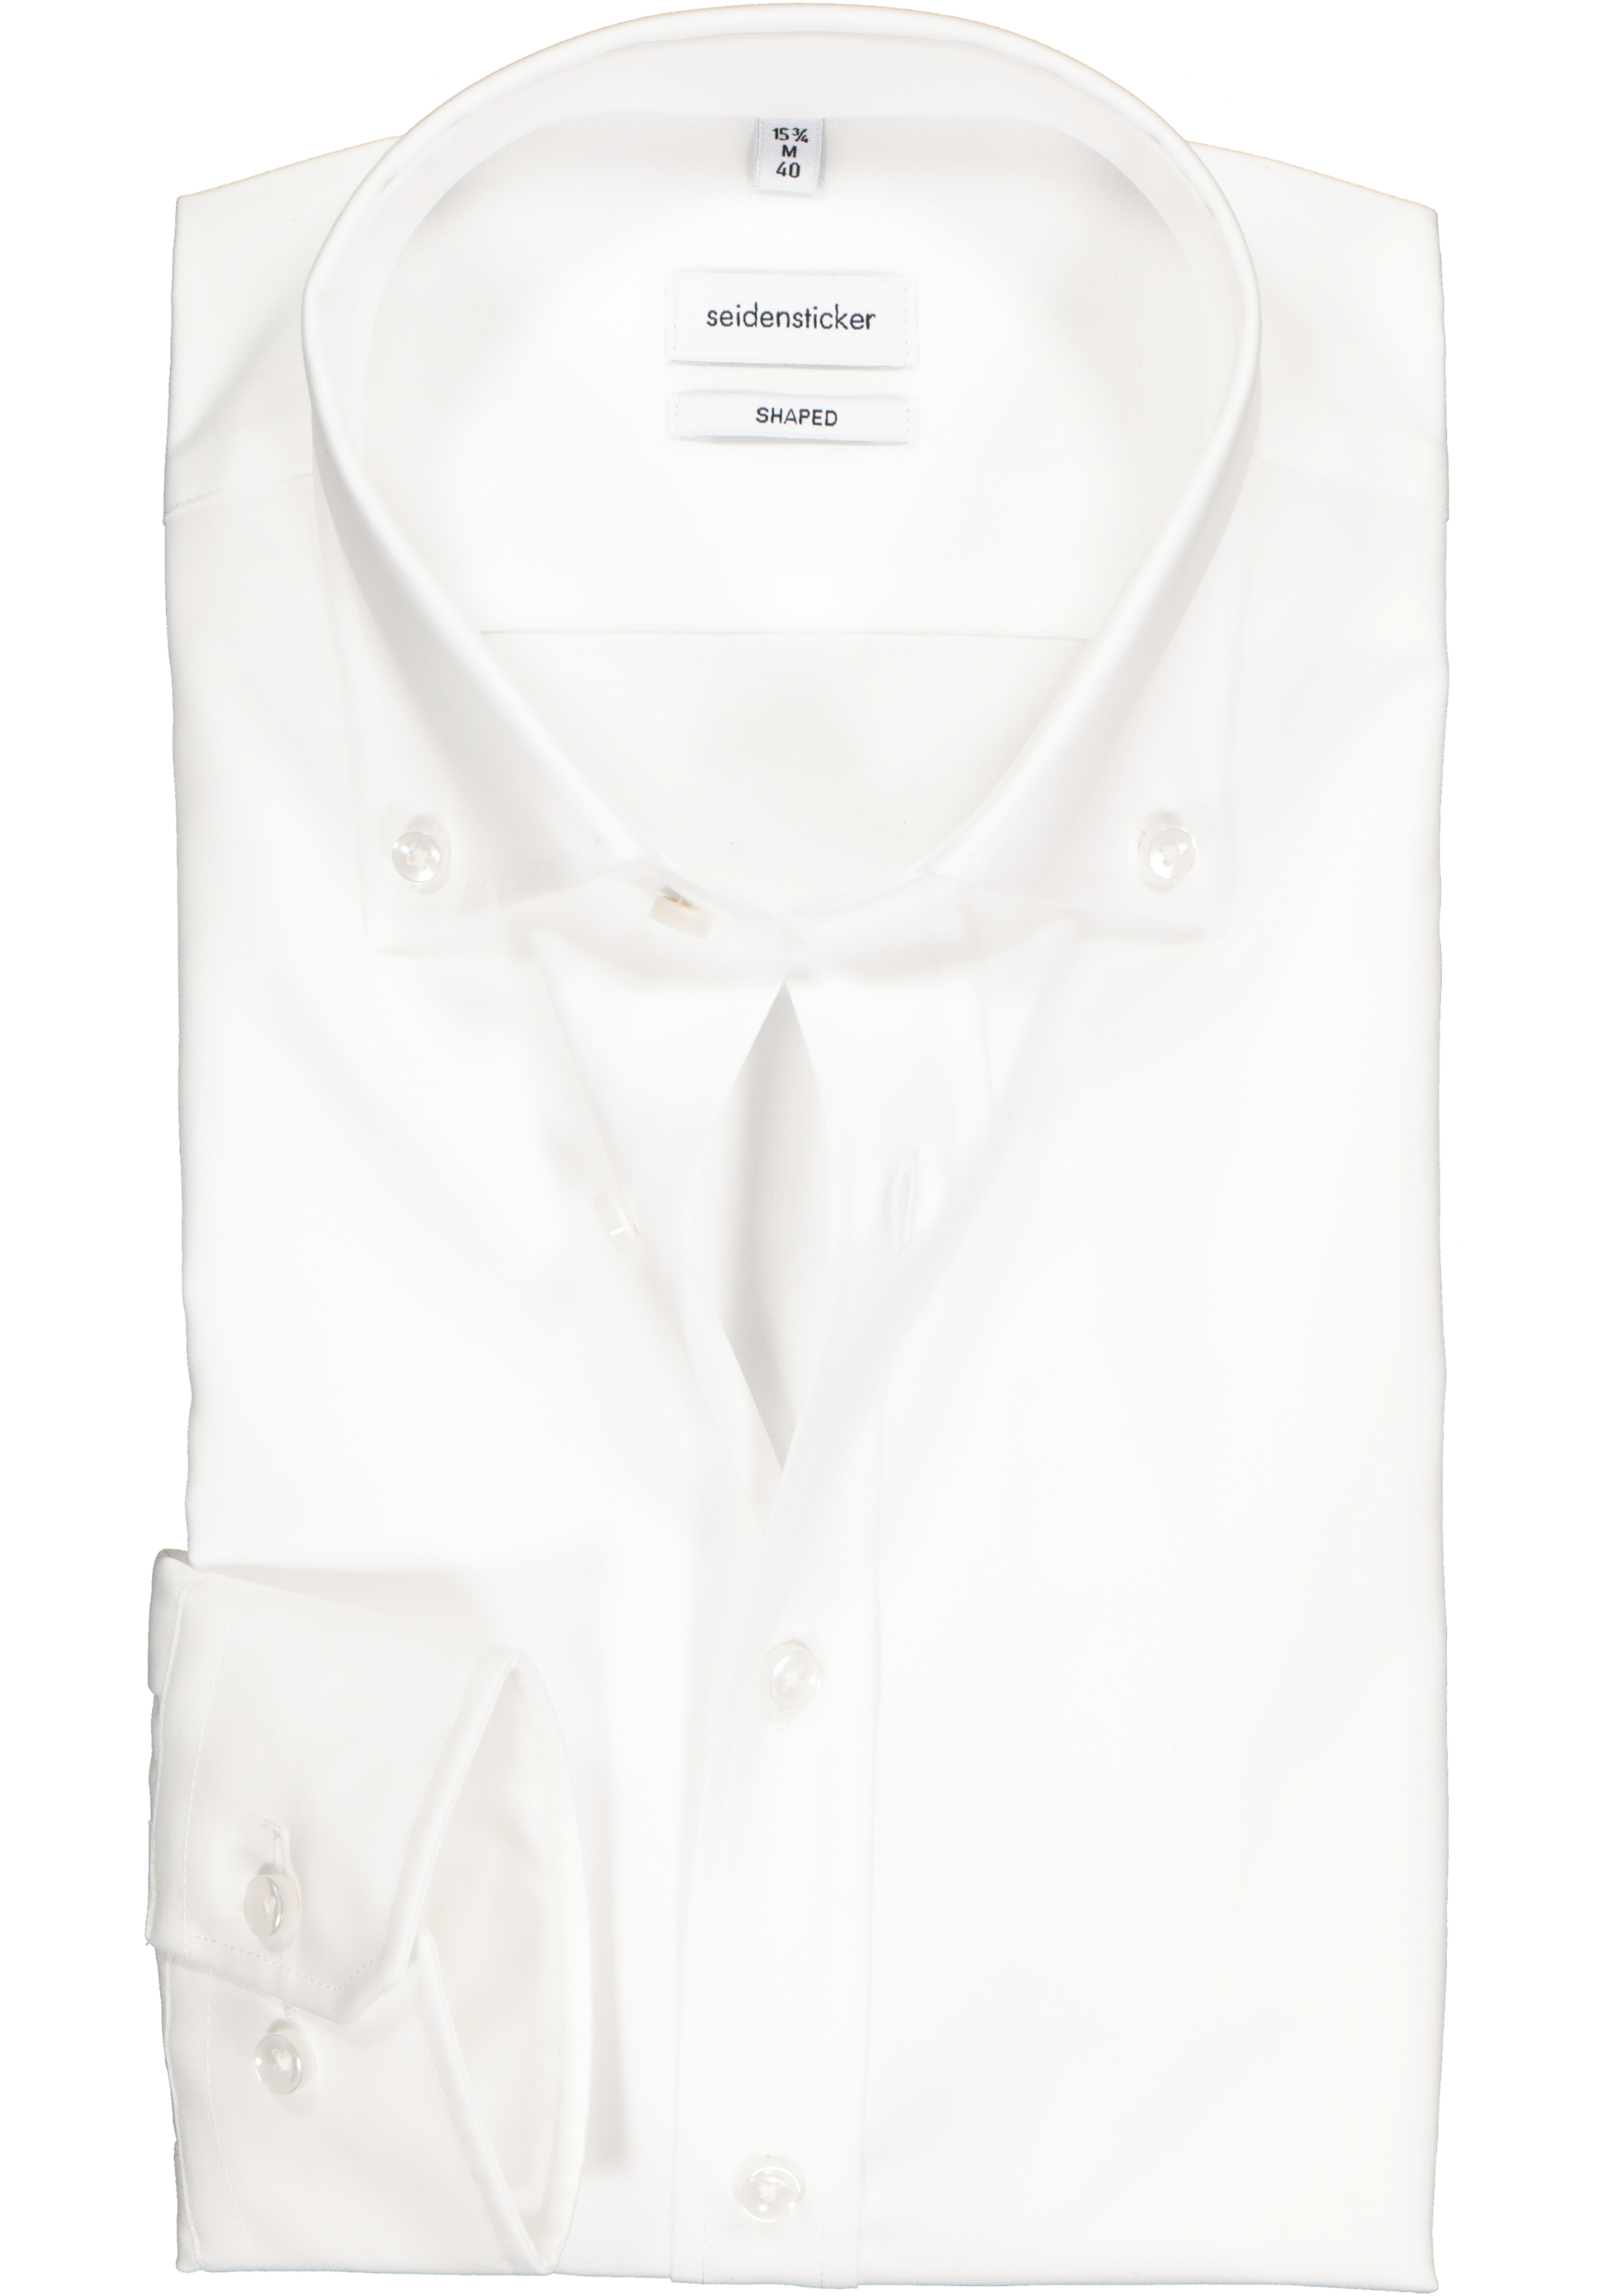 Seidensticker shaped fit overhemd, button-down kraag, wit